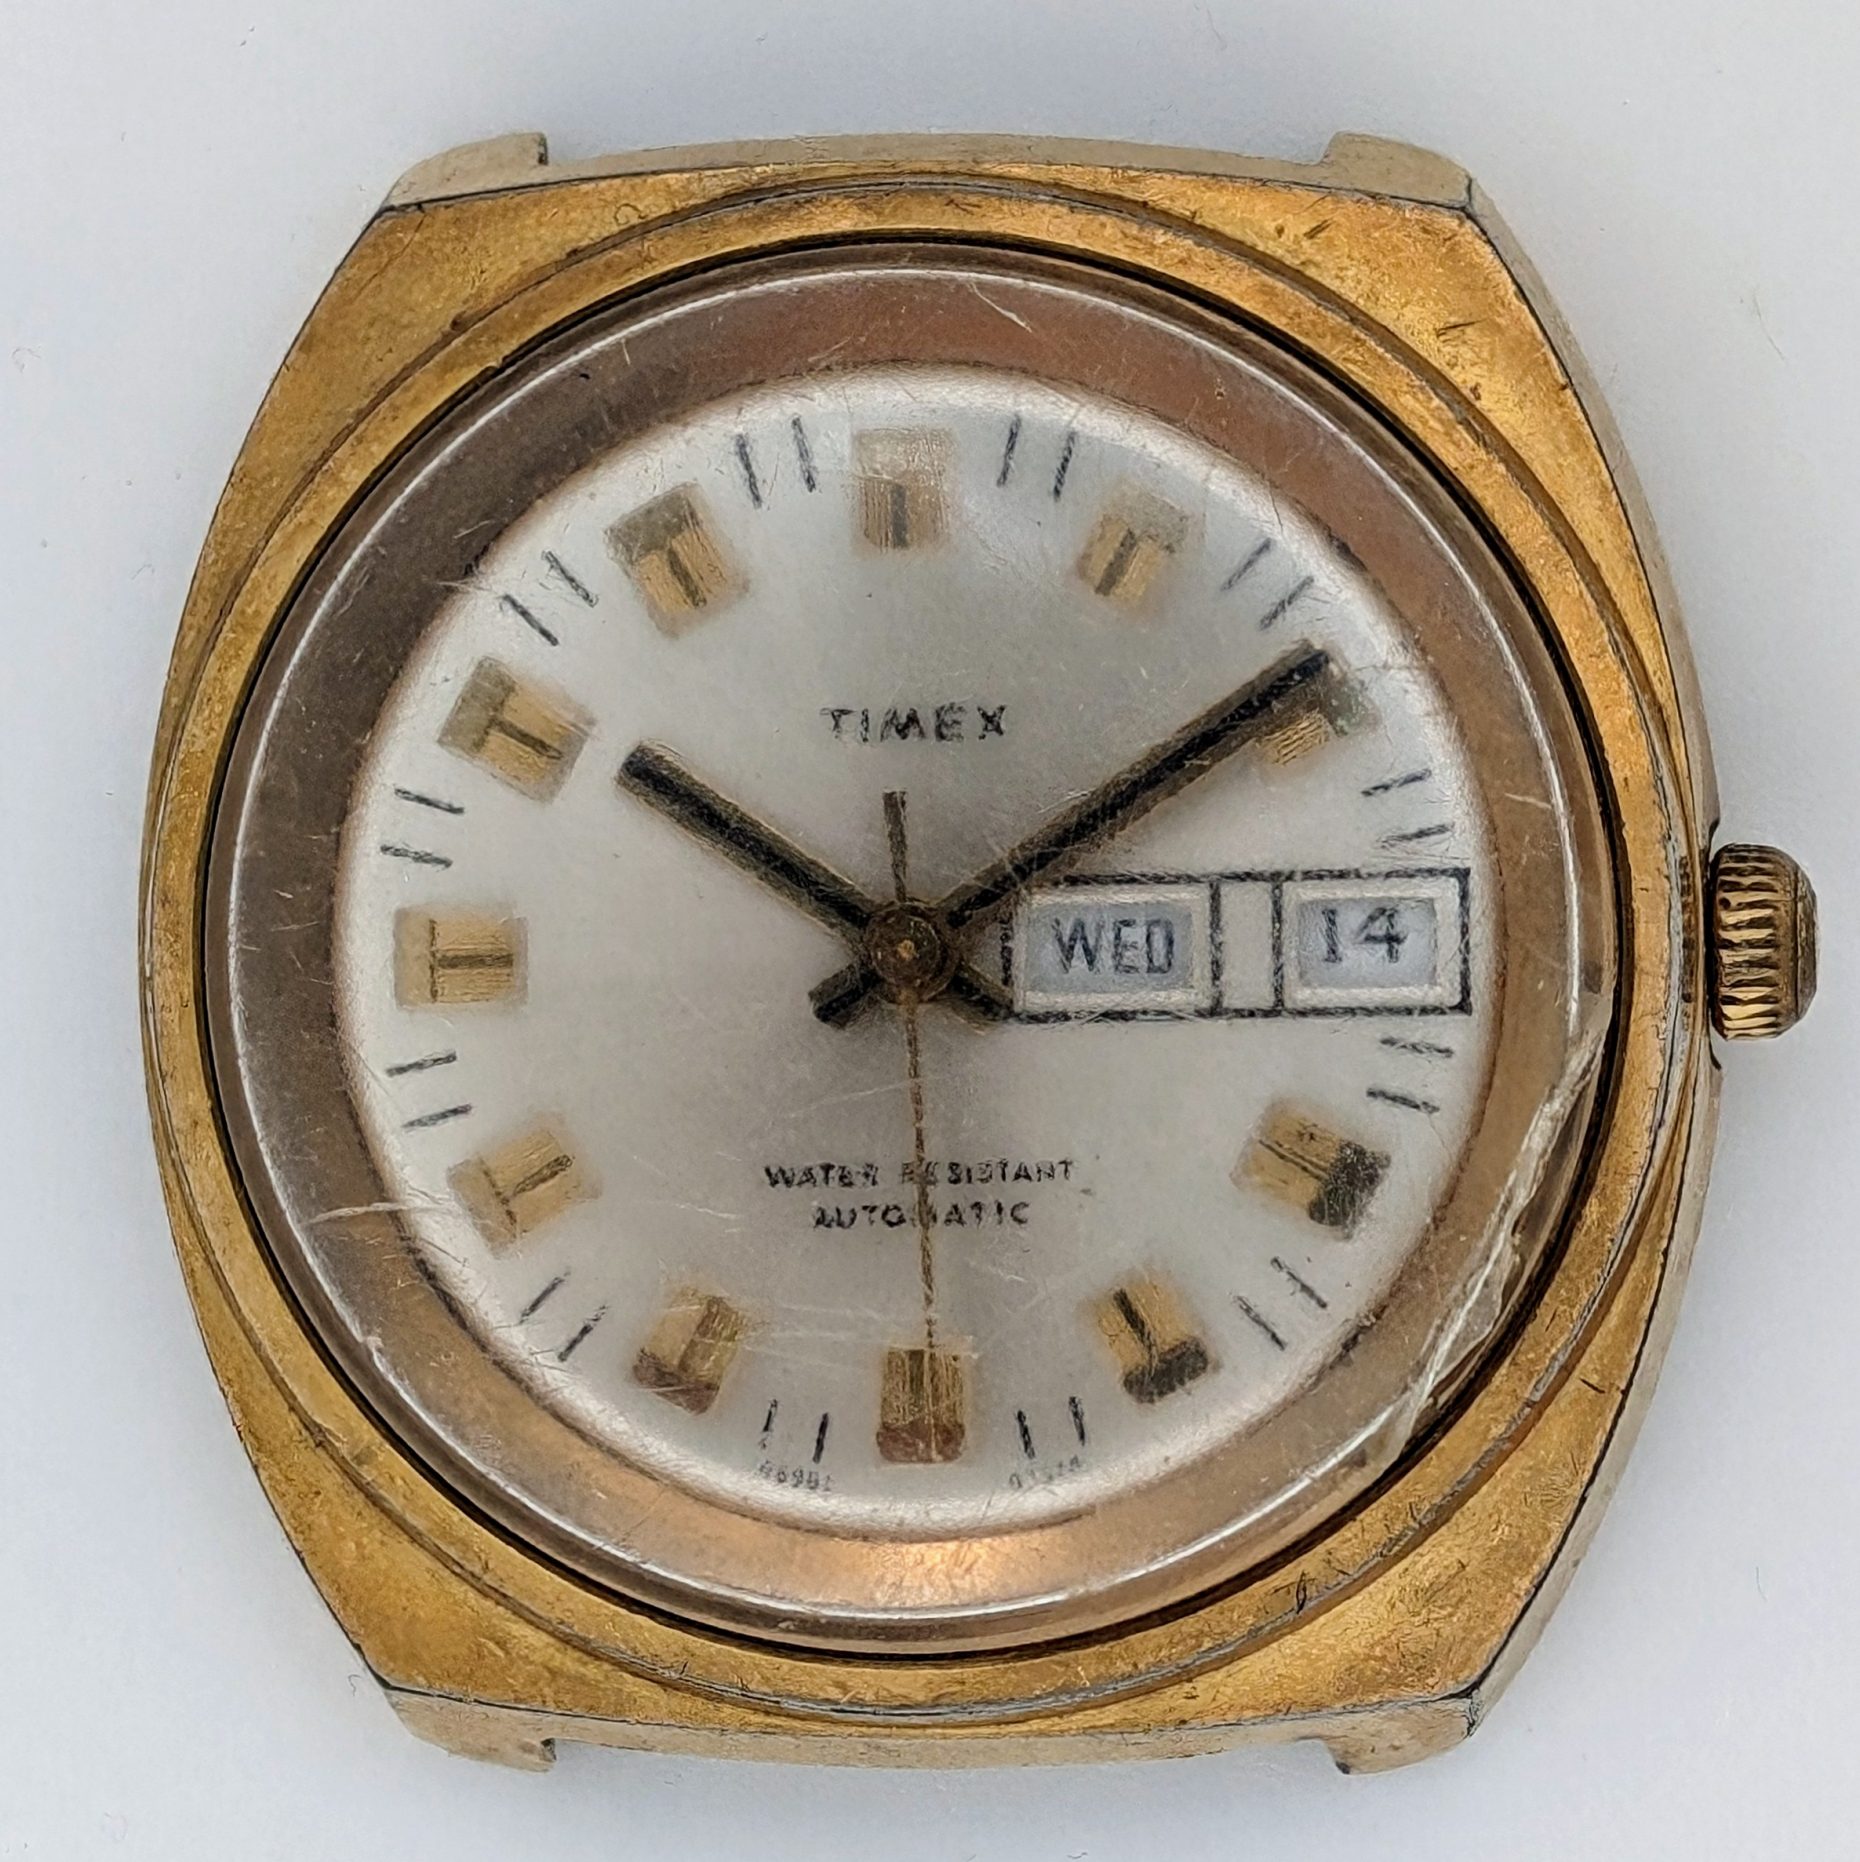 Timex Viscount Day Date 1974 Ref. 46961 03374